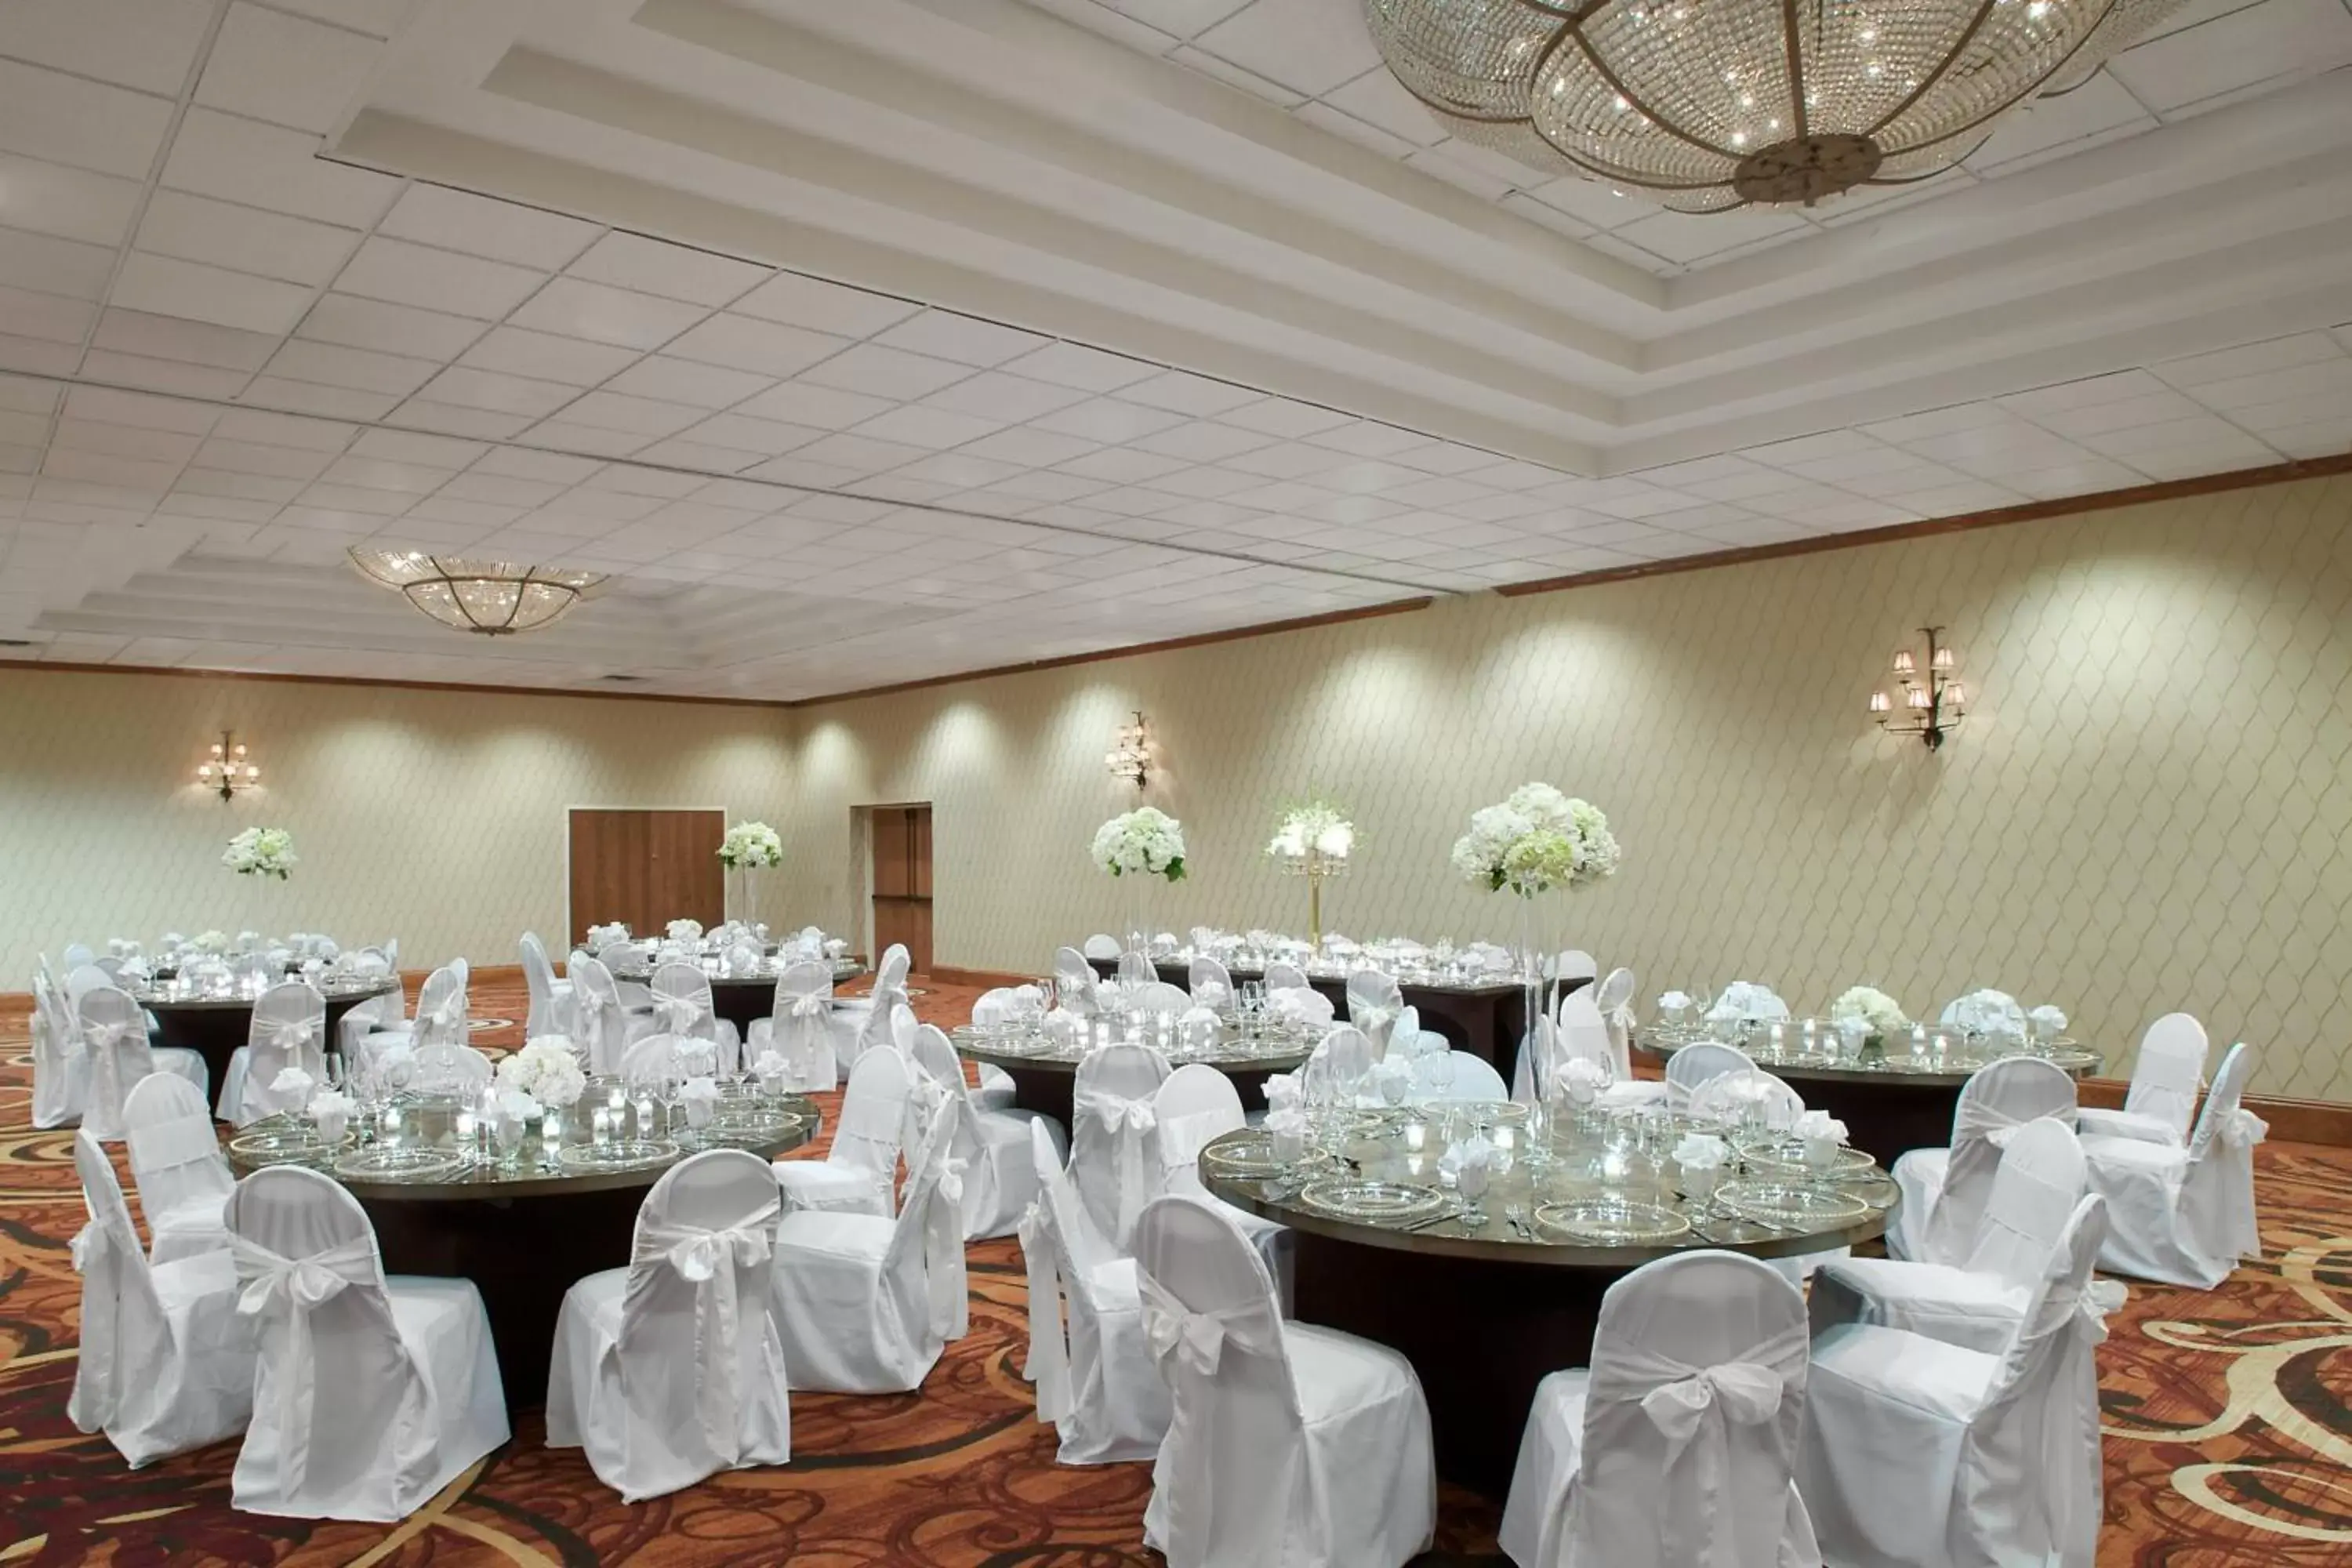 Banquet/Function facilities, Banquet Facilities in Sheraton Minneapolis West Hotel